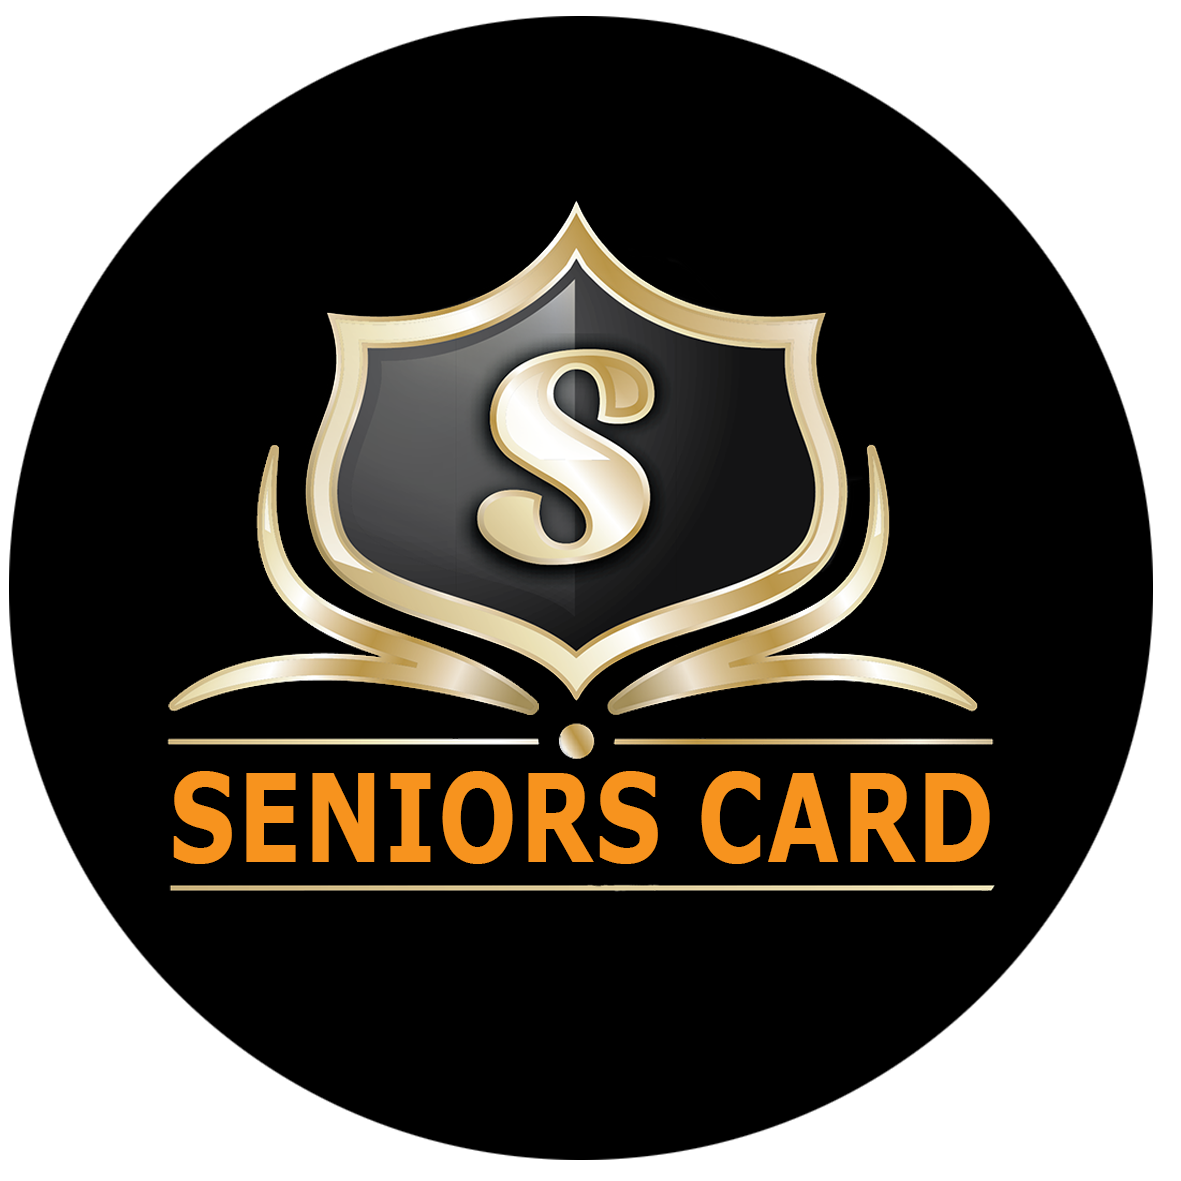 Seniors Card